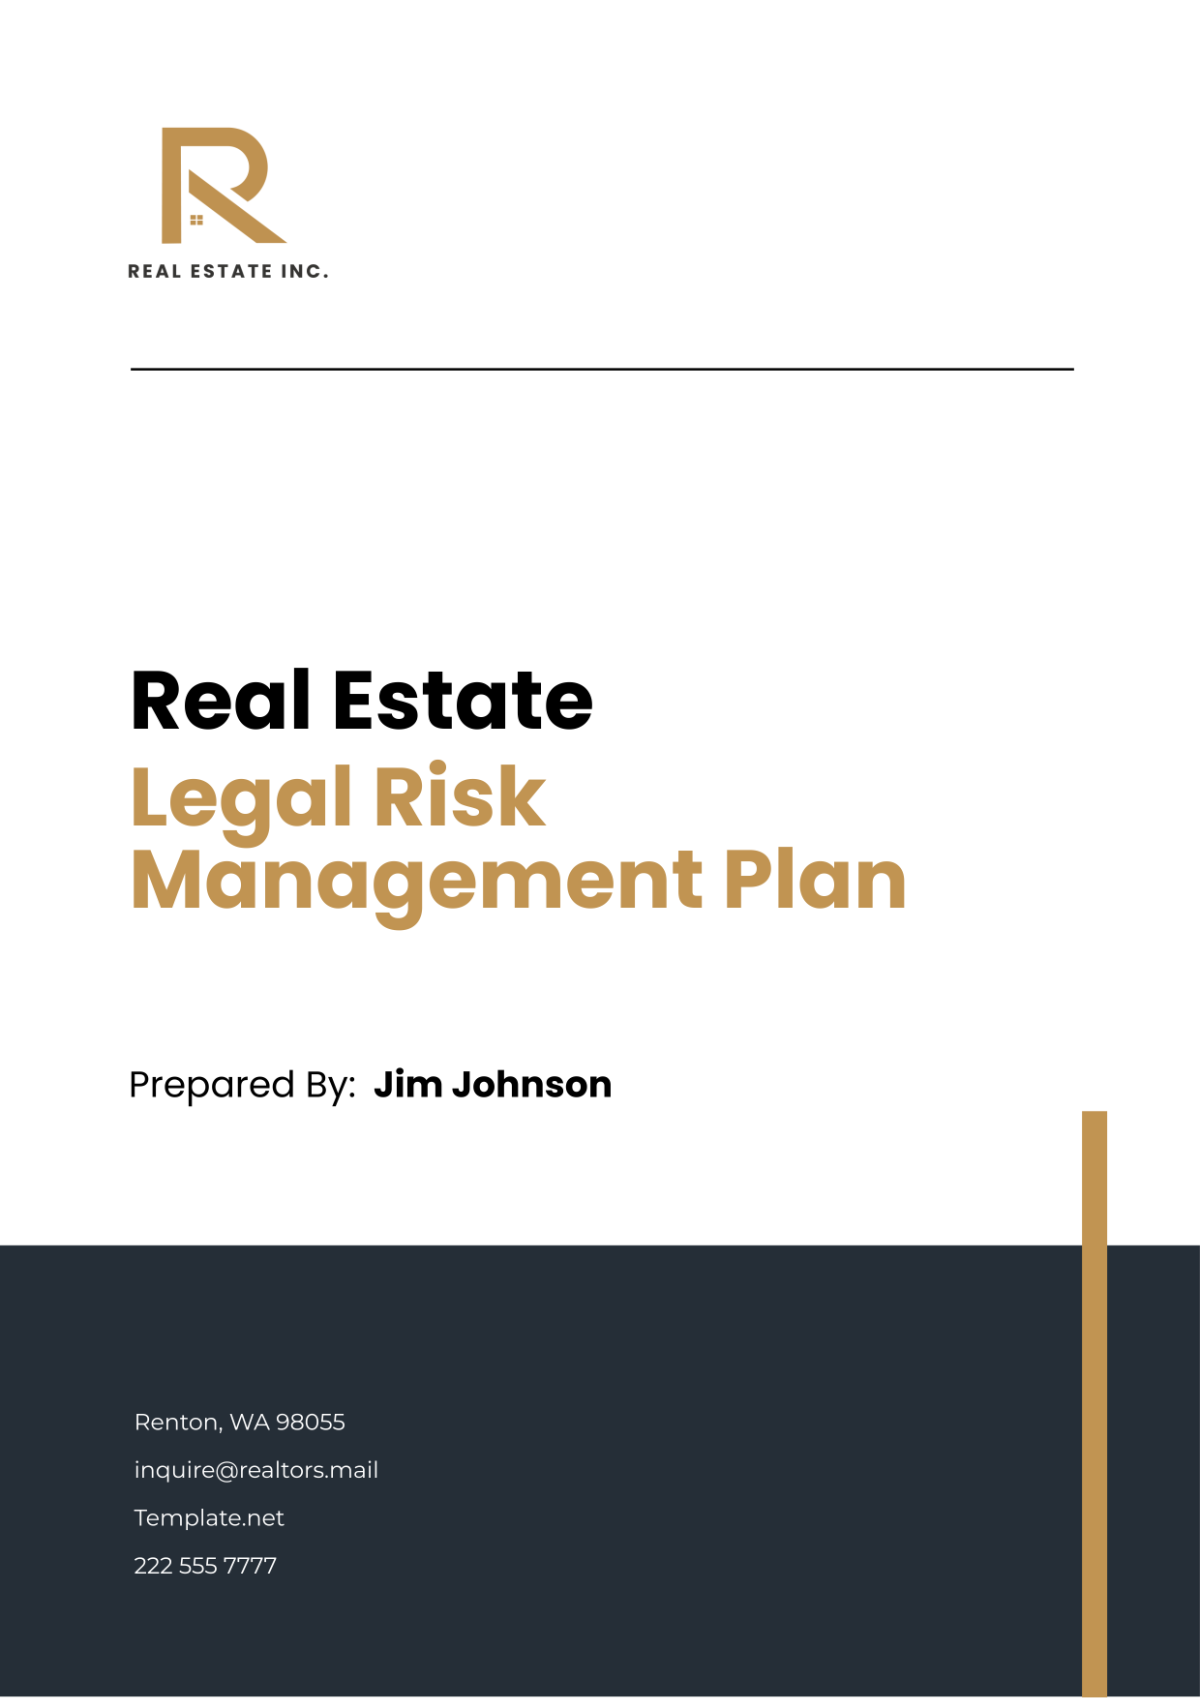 Real Estate Legal Risk Management Plan Template